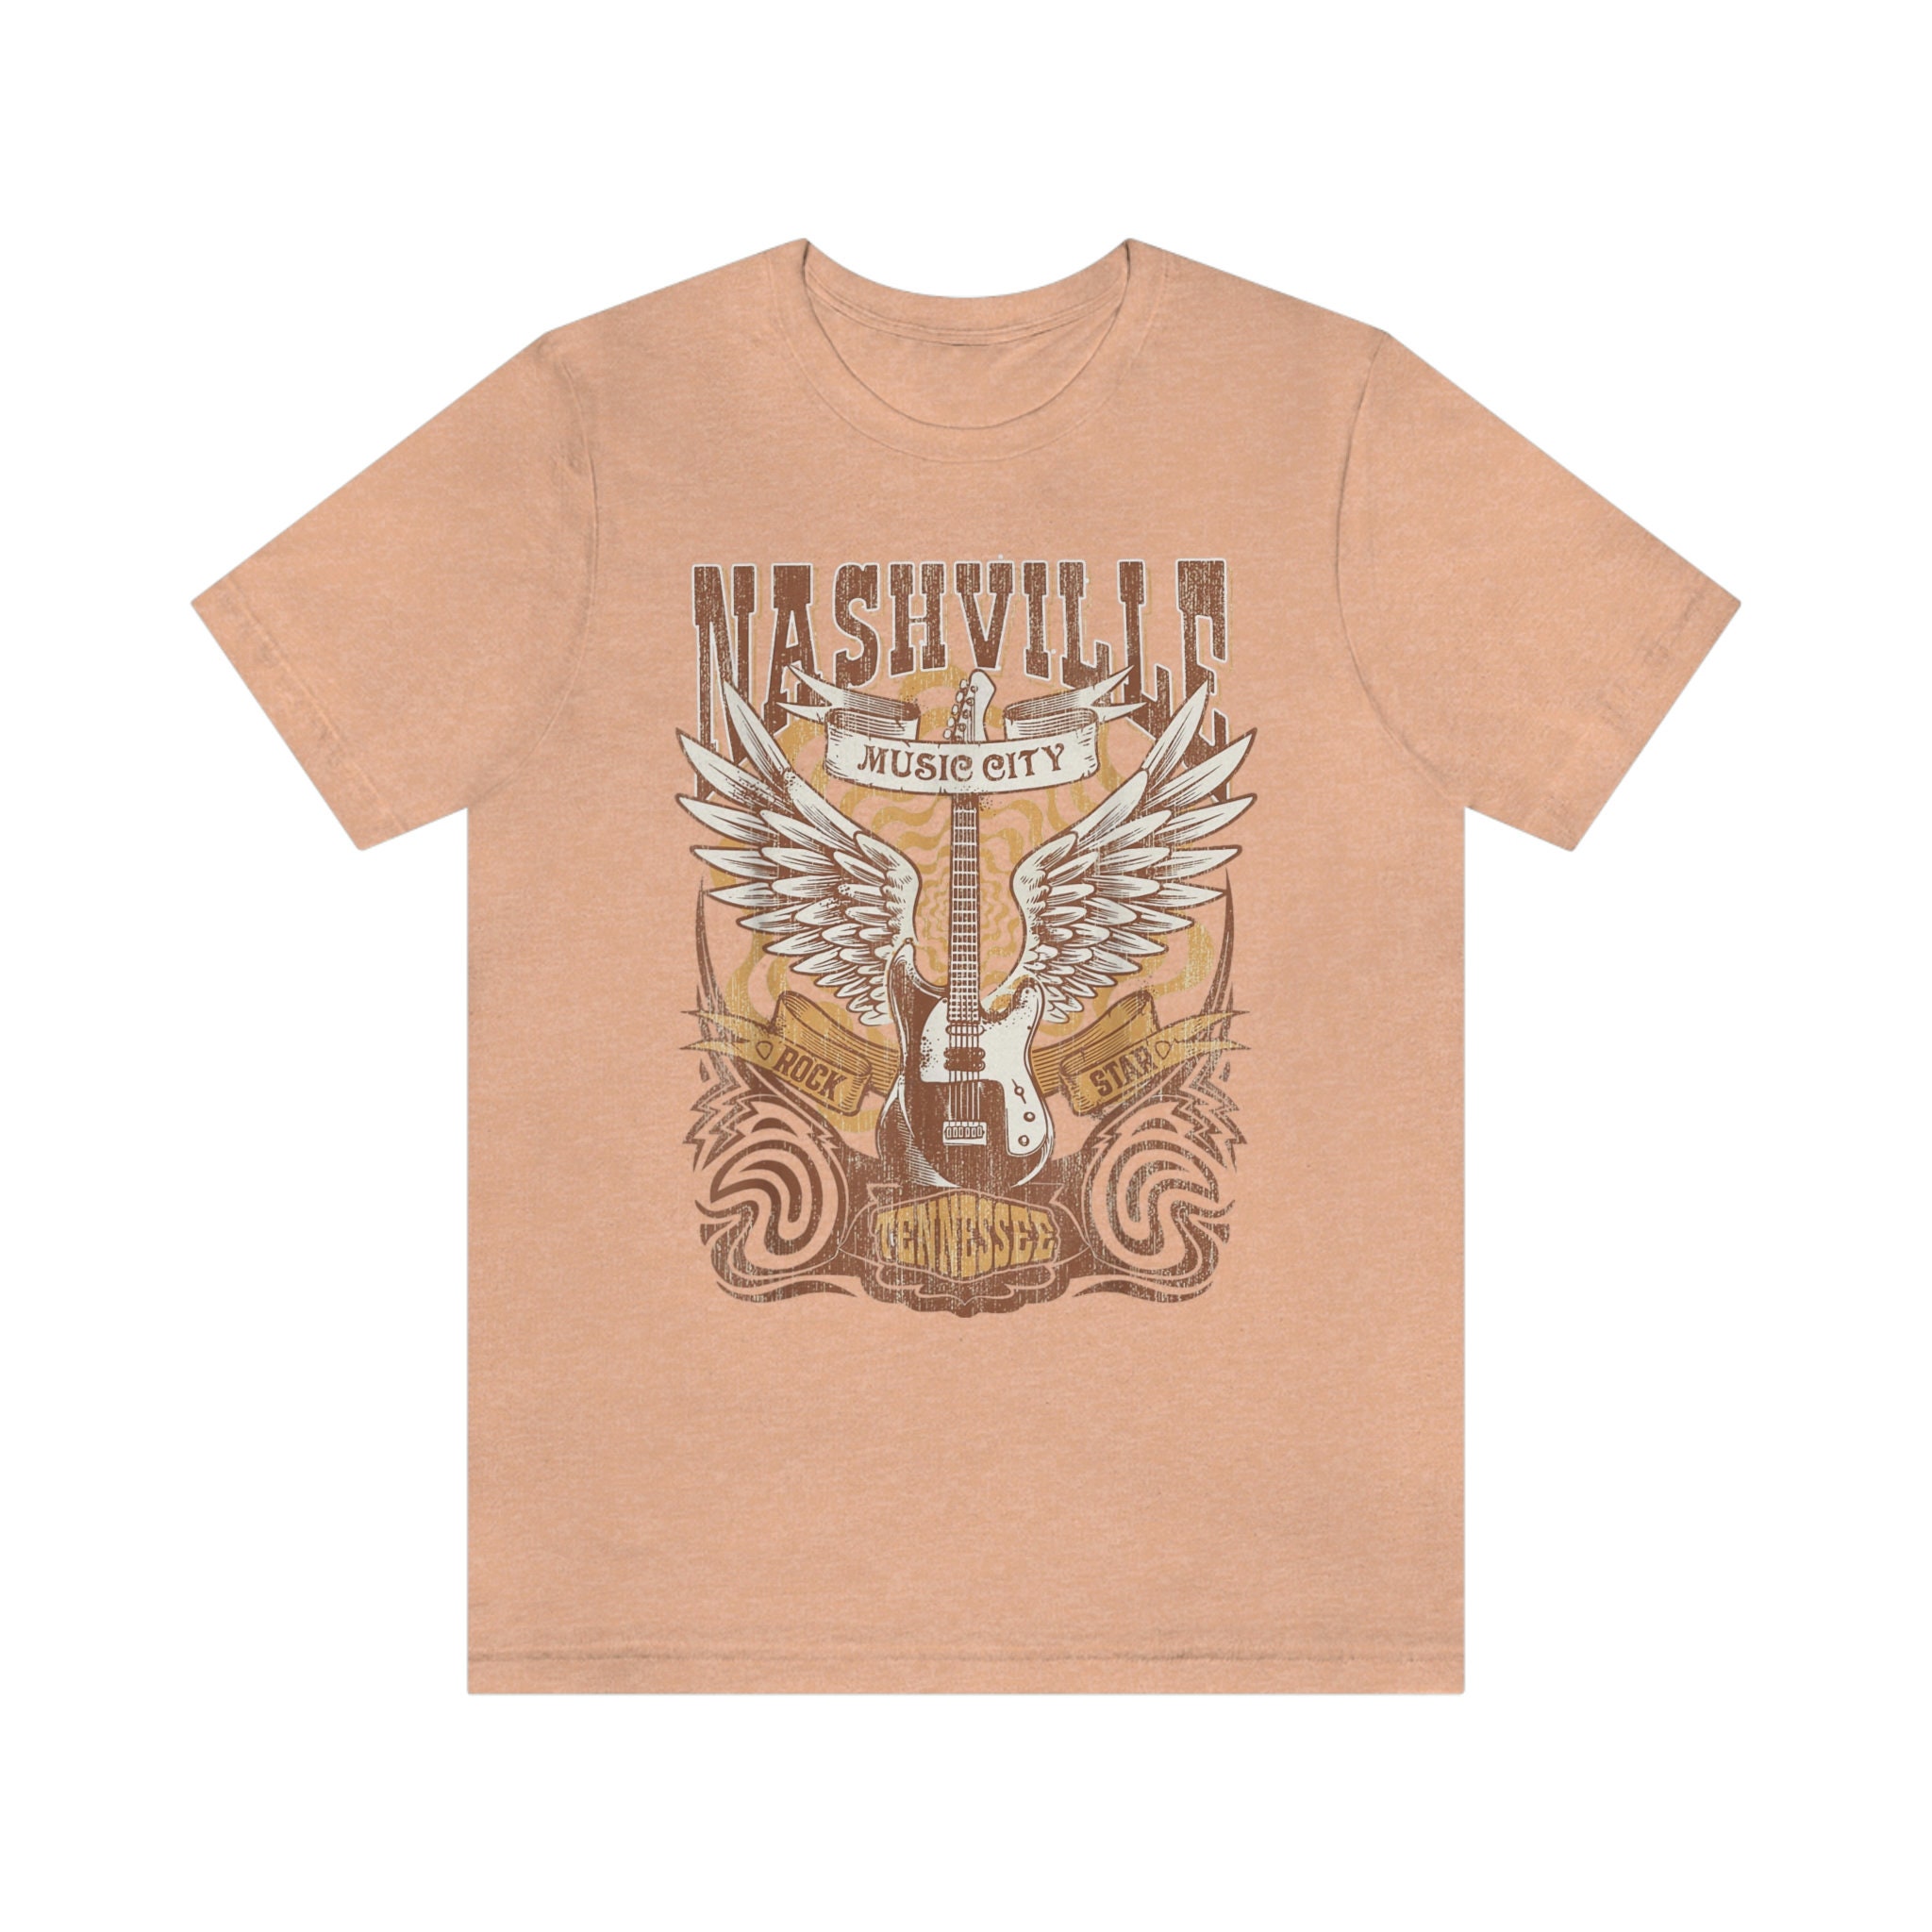 Discover Nashville Music City Tennessee Guitar Shirt, Girls Trip To Nashville T-Shirt